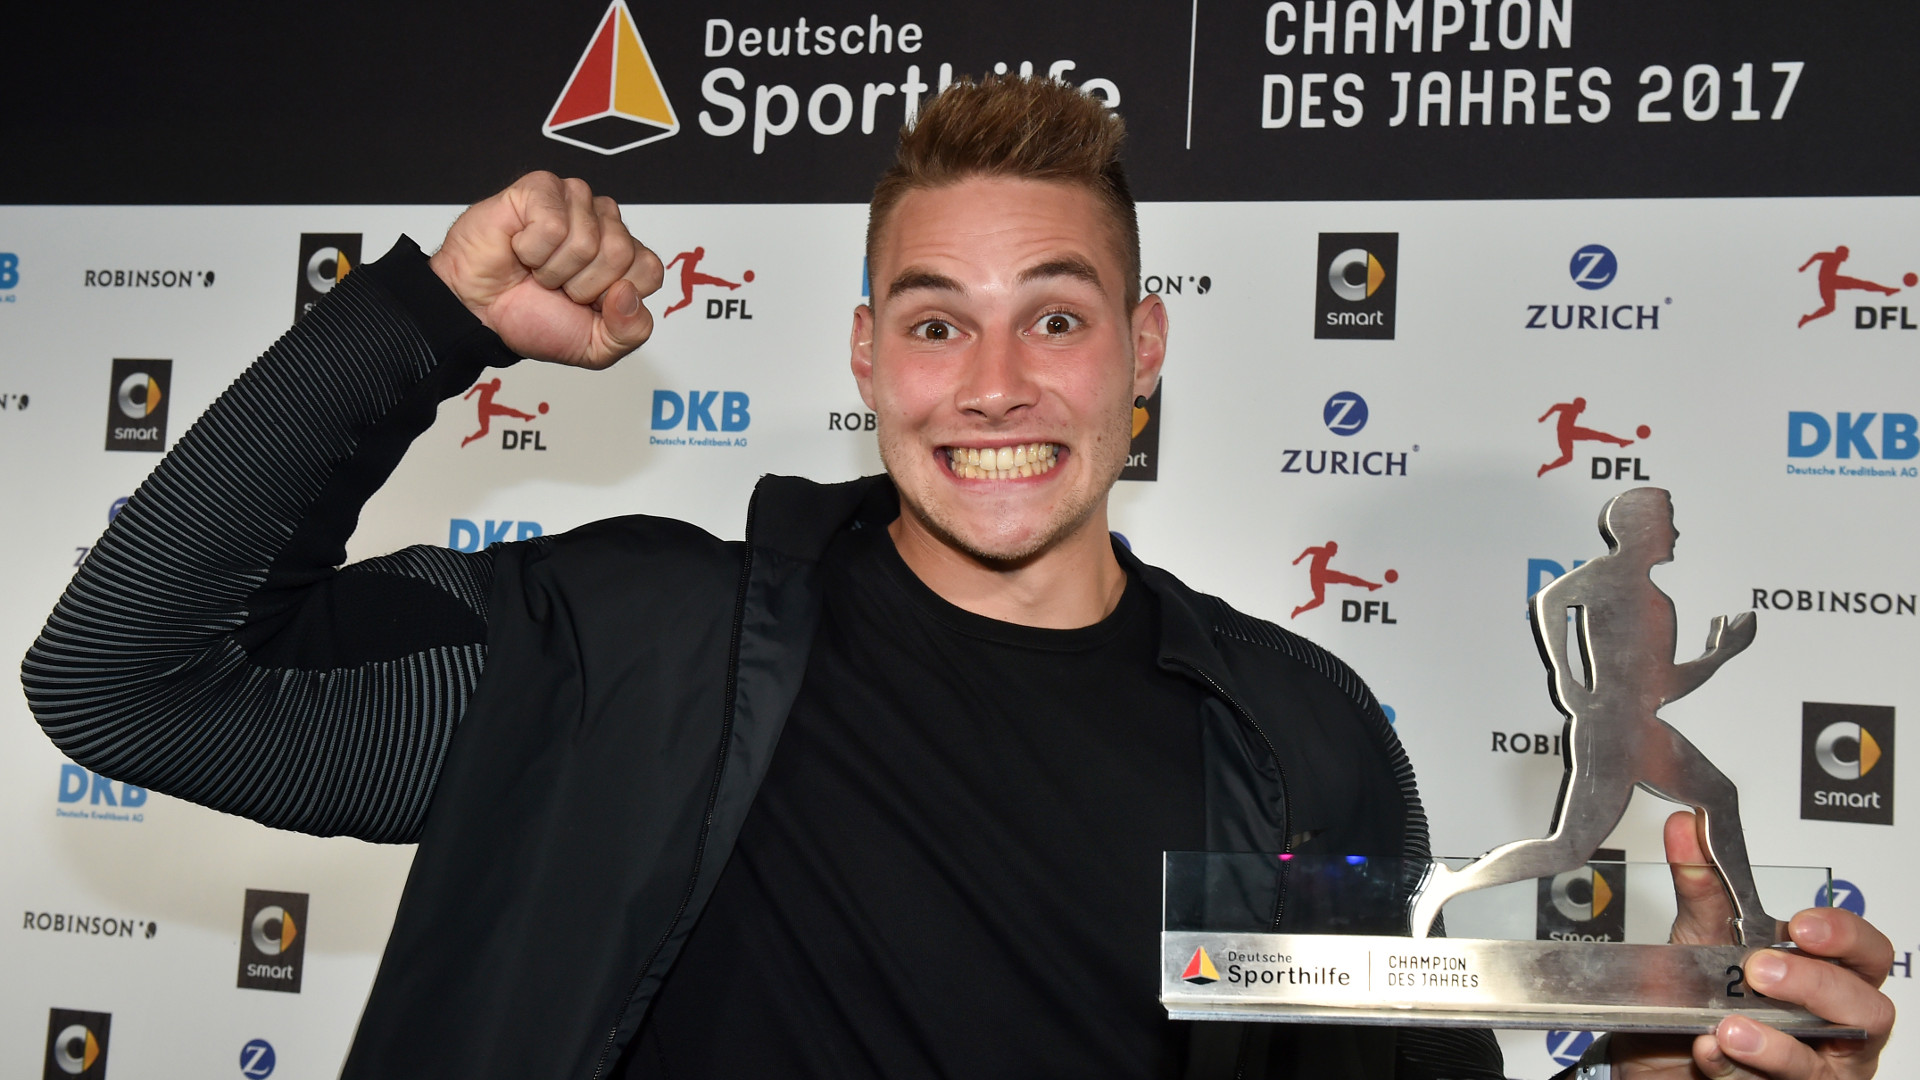 Johannes Vetter - Champion des Jahres